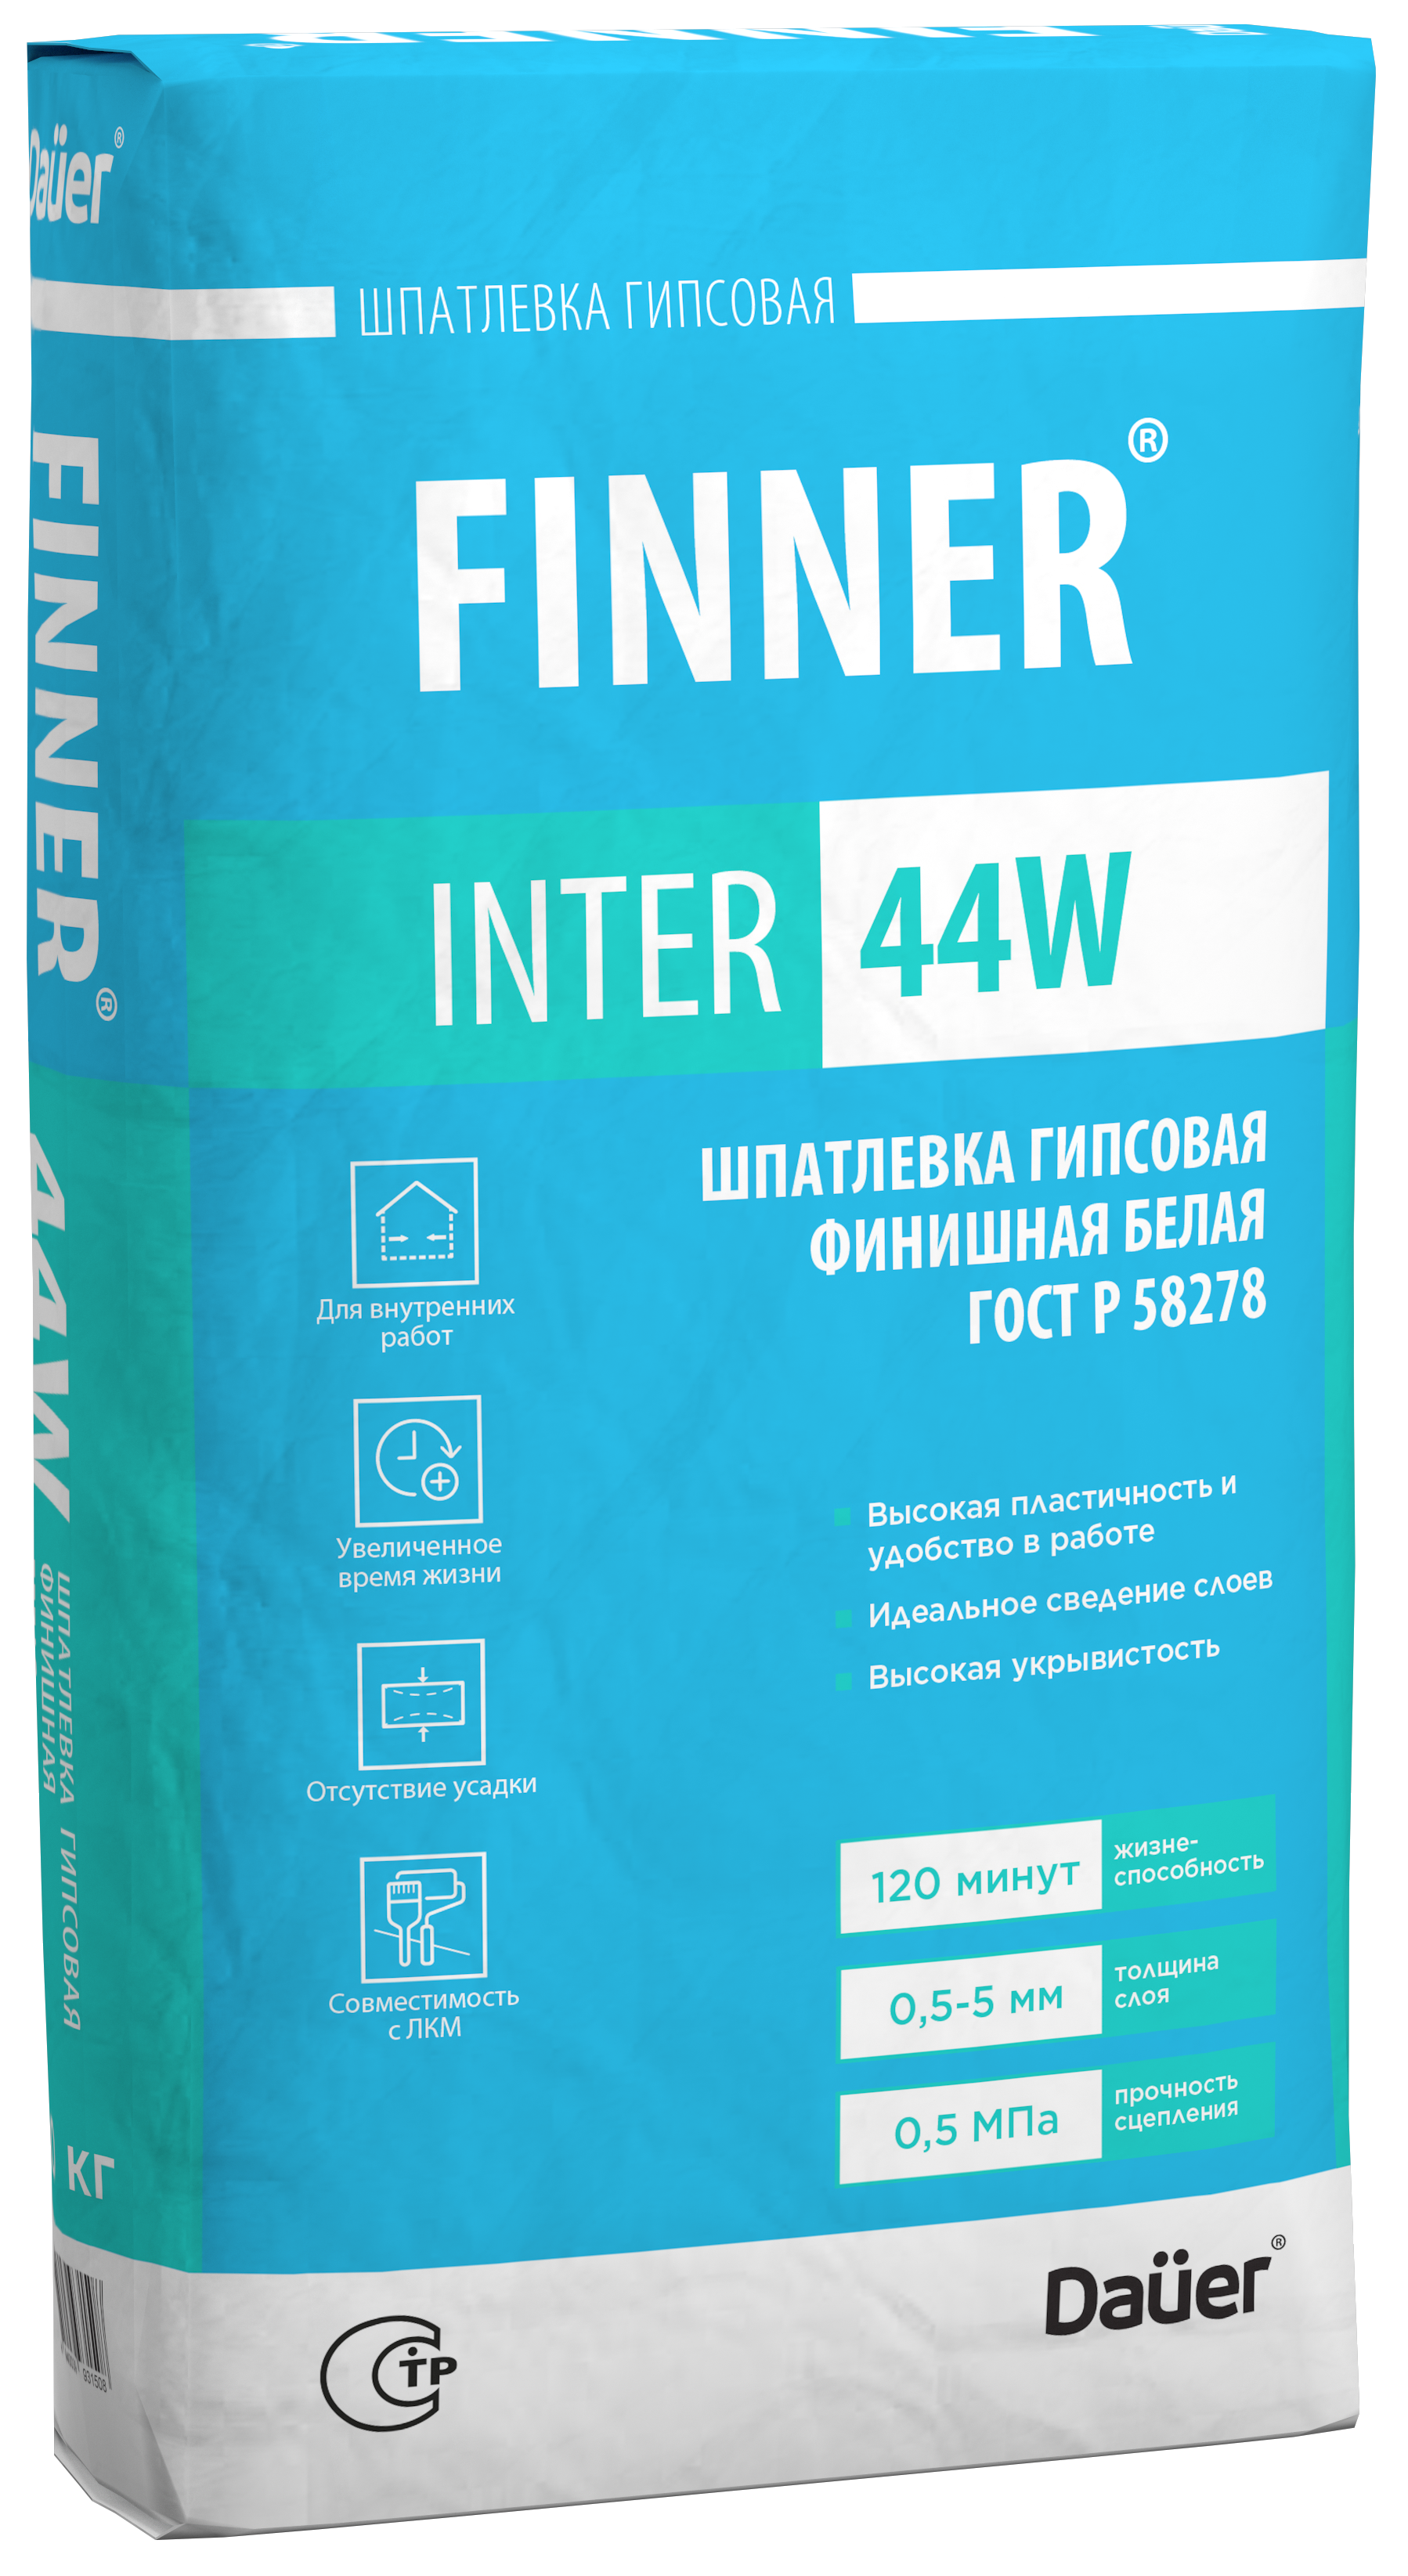 FINNER® INTER 44 W Шпатлевка гипсовая финишная белая 120, ГОСТ Р 58278